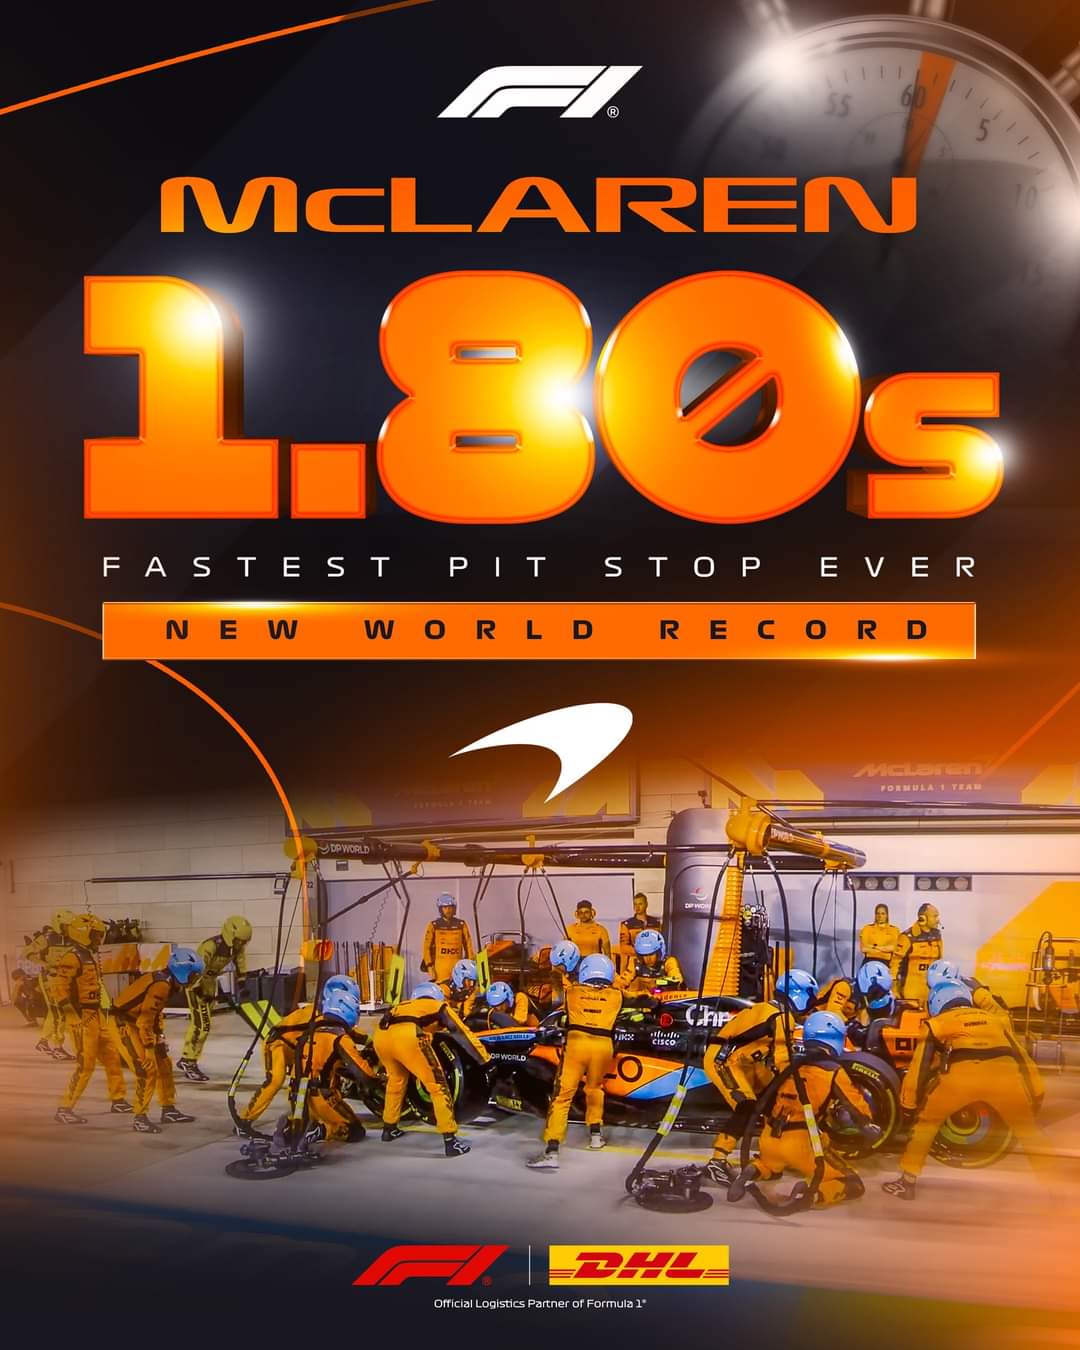 f1-grand-prix-qatar-mclaren-McLaren-Solus-GT-katar-gp-world-record-pit-stop-500podium